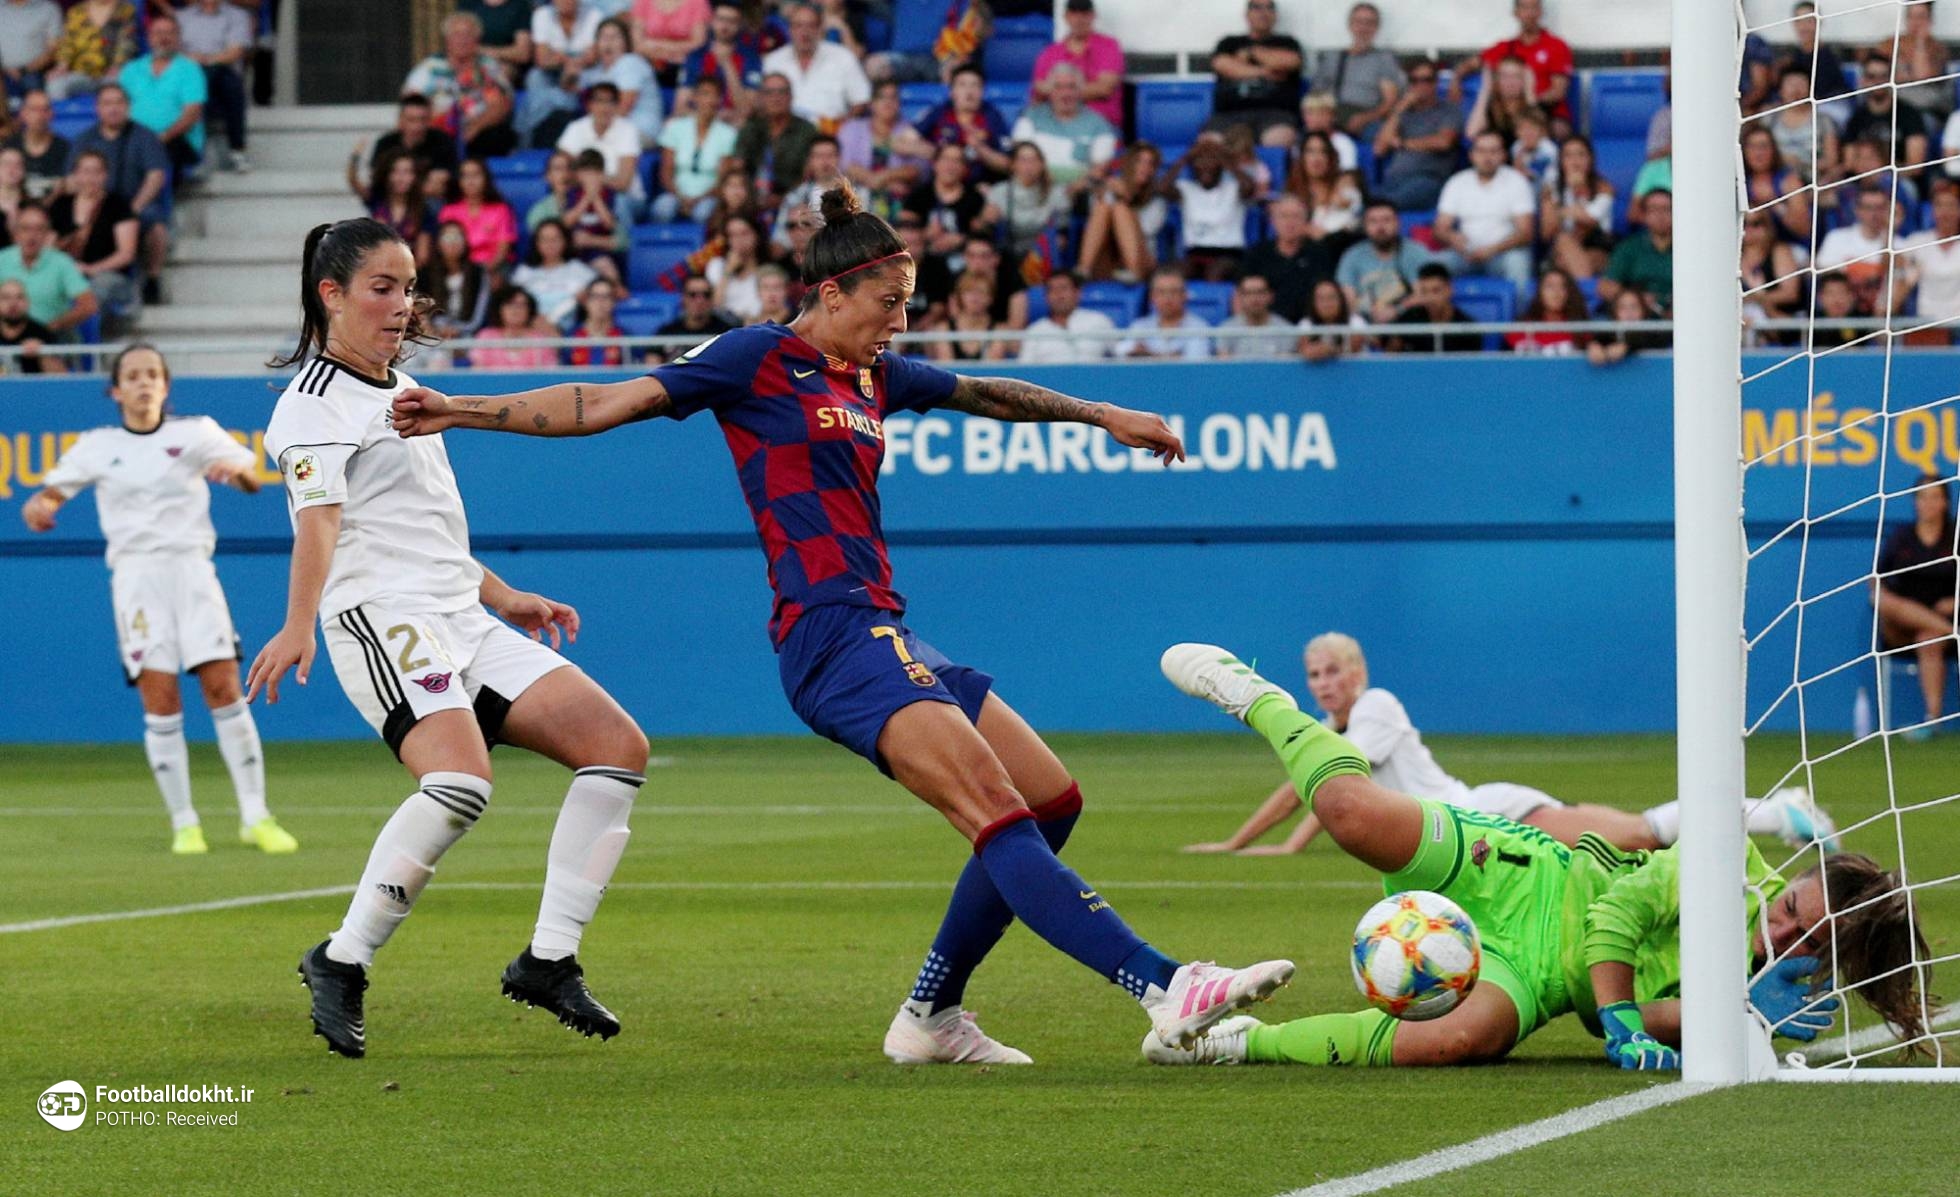 شكست سنگين تیم زنان رئال مادرید مقابل بارسلونا + تصاویر و فیلم بازی